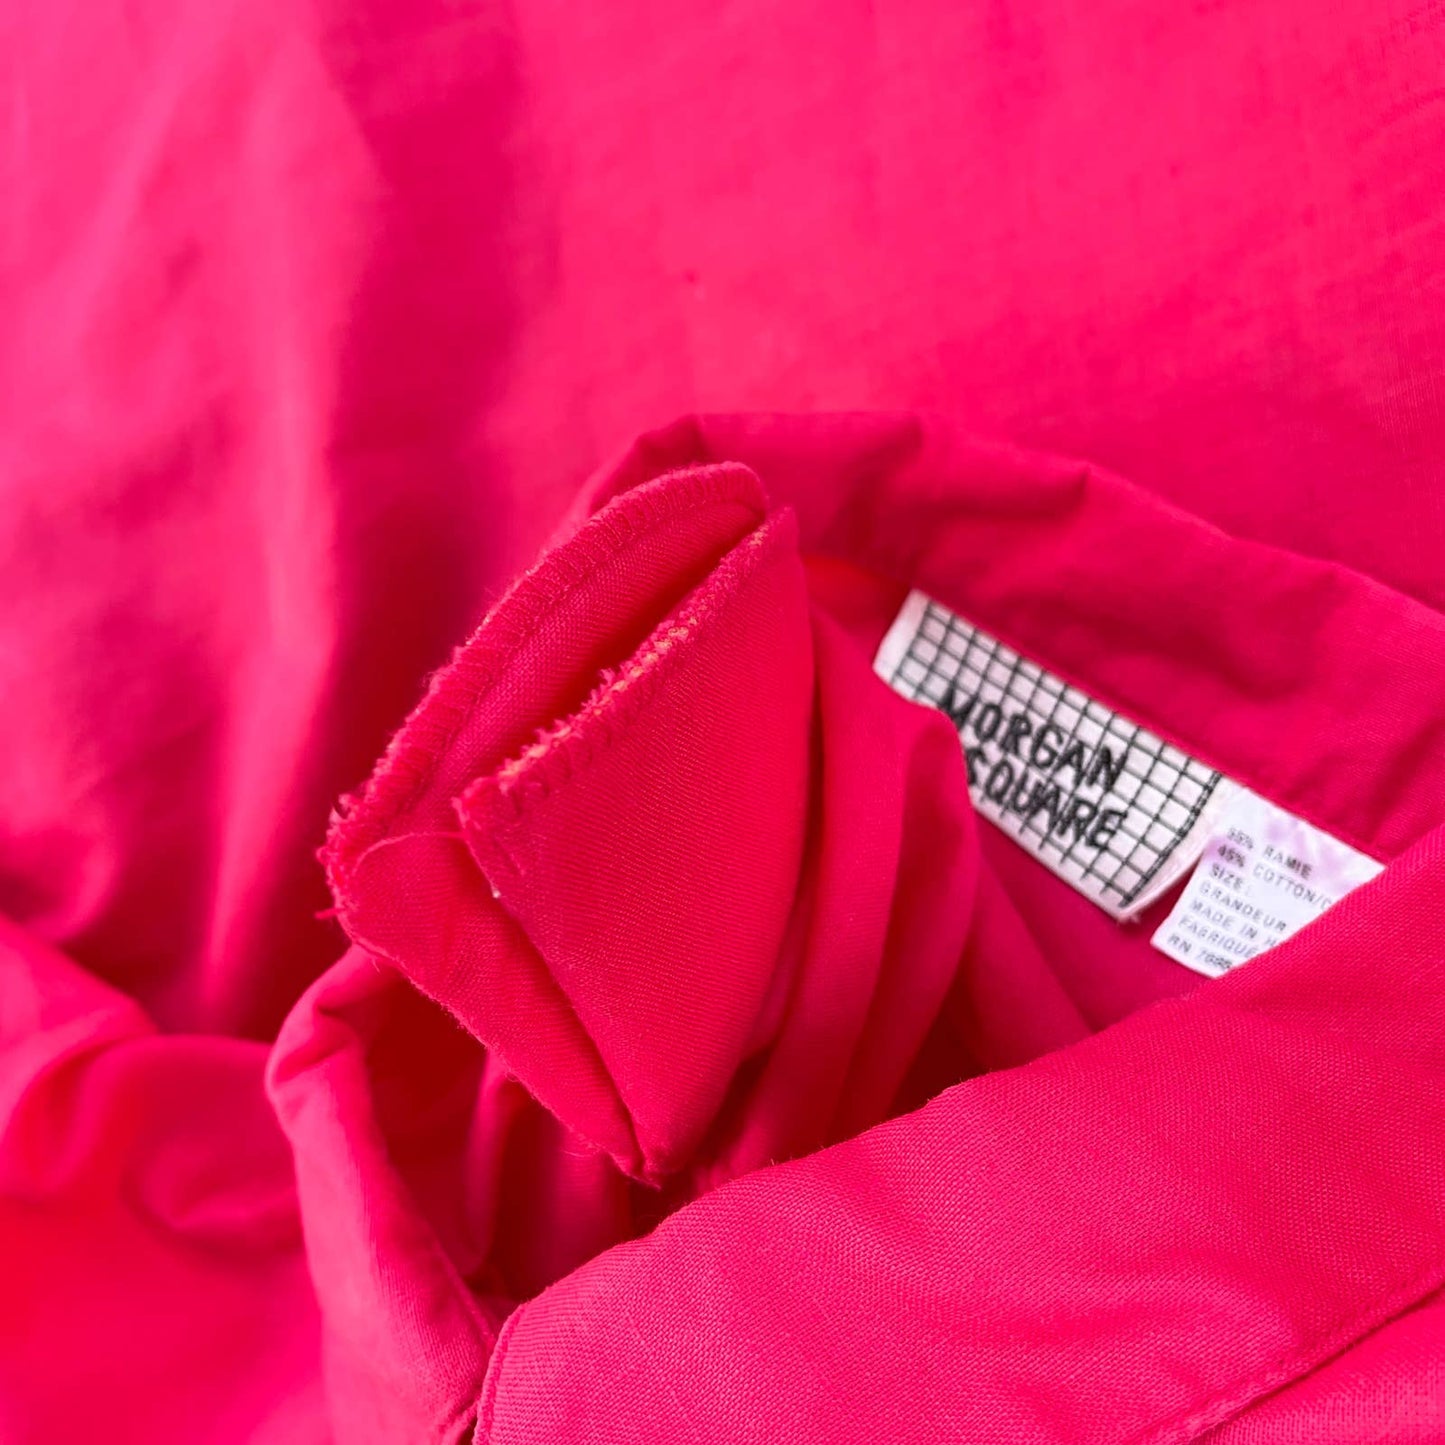 Vintage 90s Hot Pink Boxy Blouse Cotton Blend Button Up Morgan Square Size 22